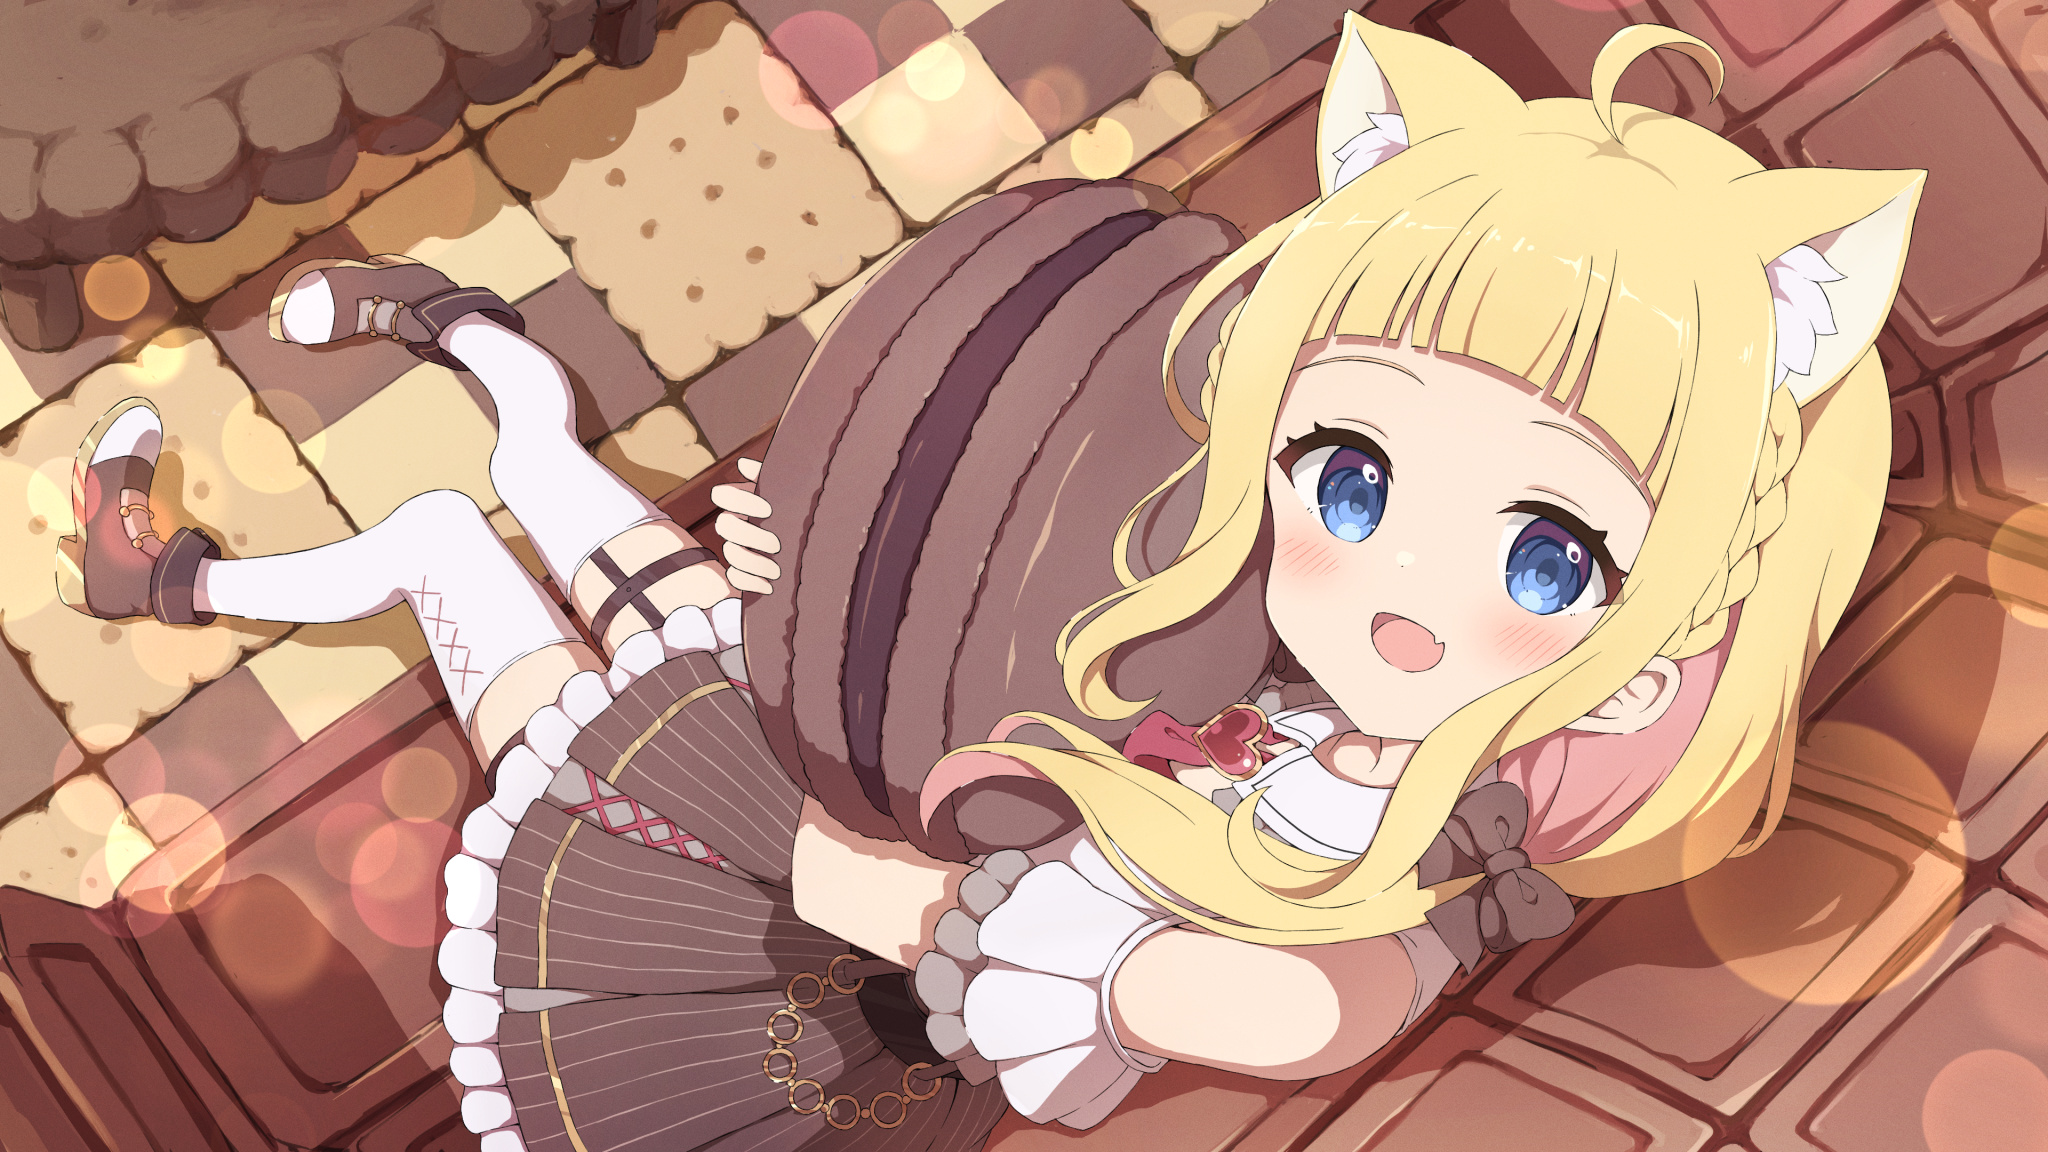 Anime 2048x1152 original characters cat ears blue eyes blonde anime girls cat girl stockings looking at viewer blushing open mouth macarons sitting braids